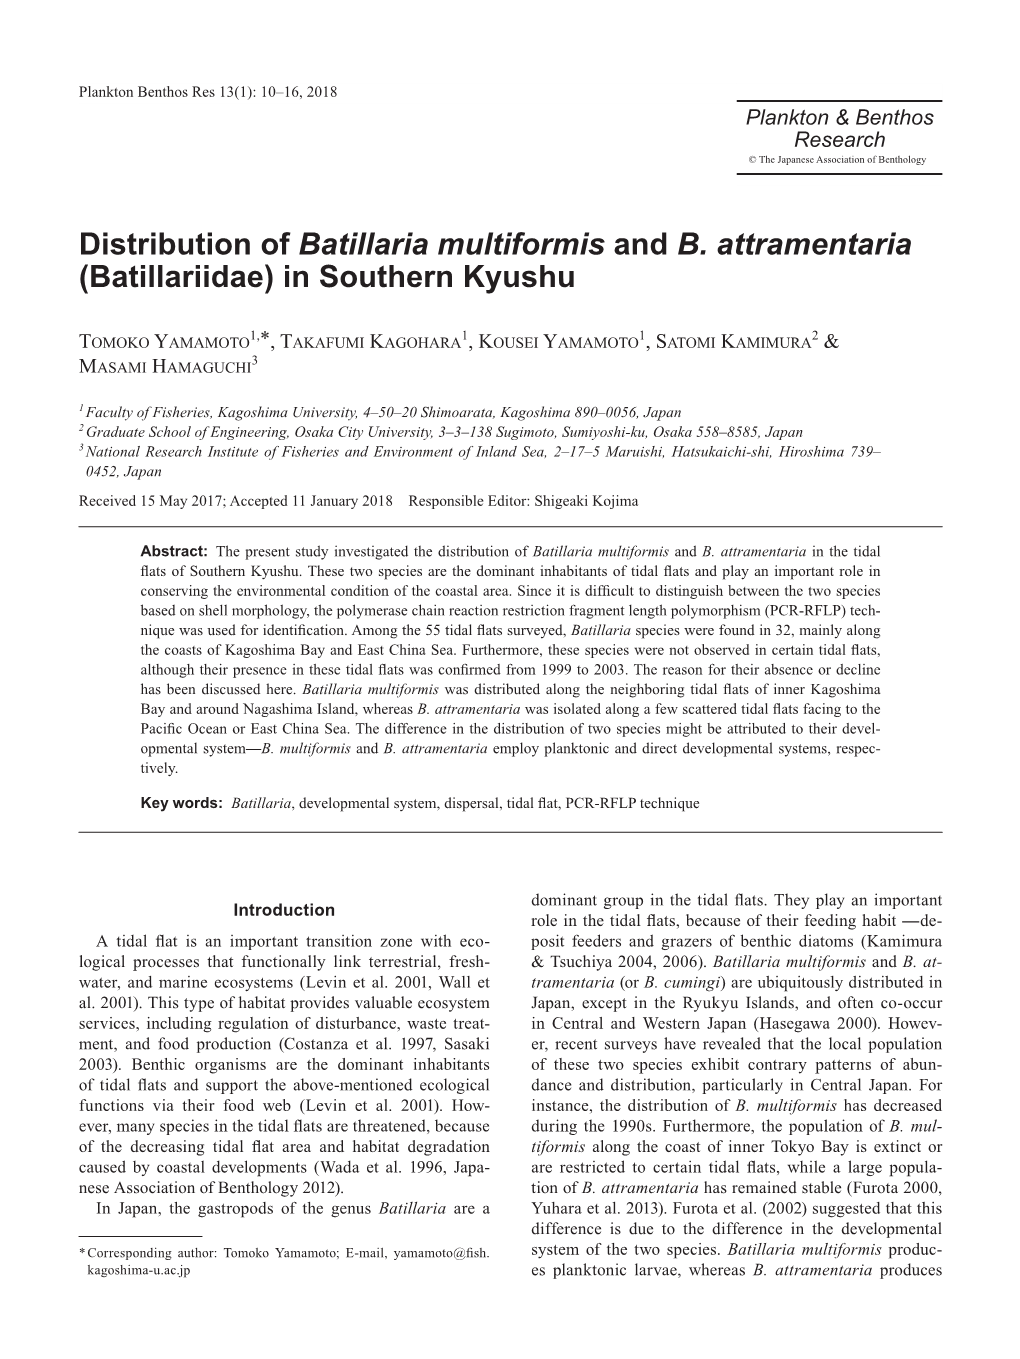 Distribution of Batillaria Multiformis and B. Attramentaria (Batillariidae) in Southern Kyushu